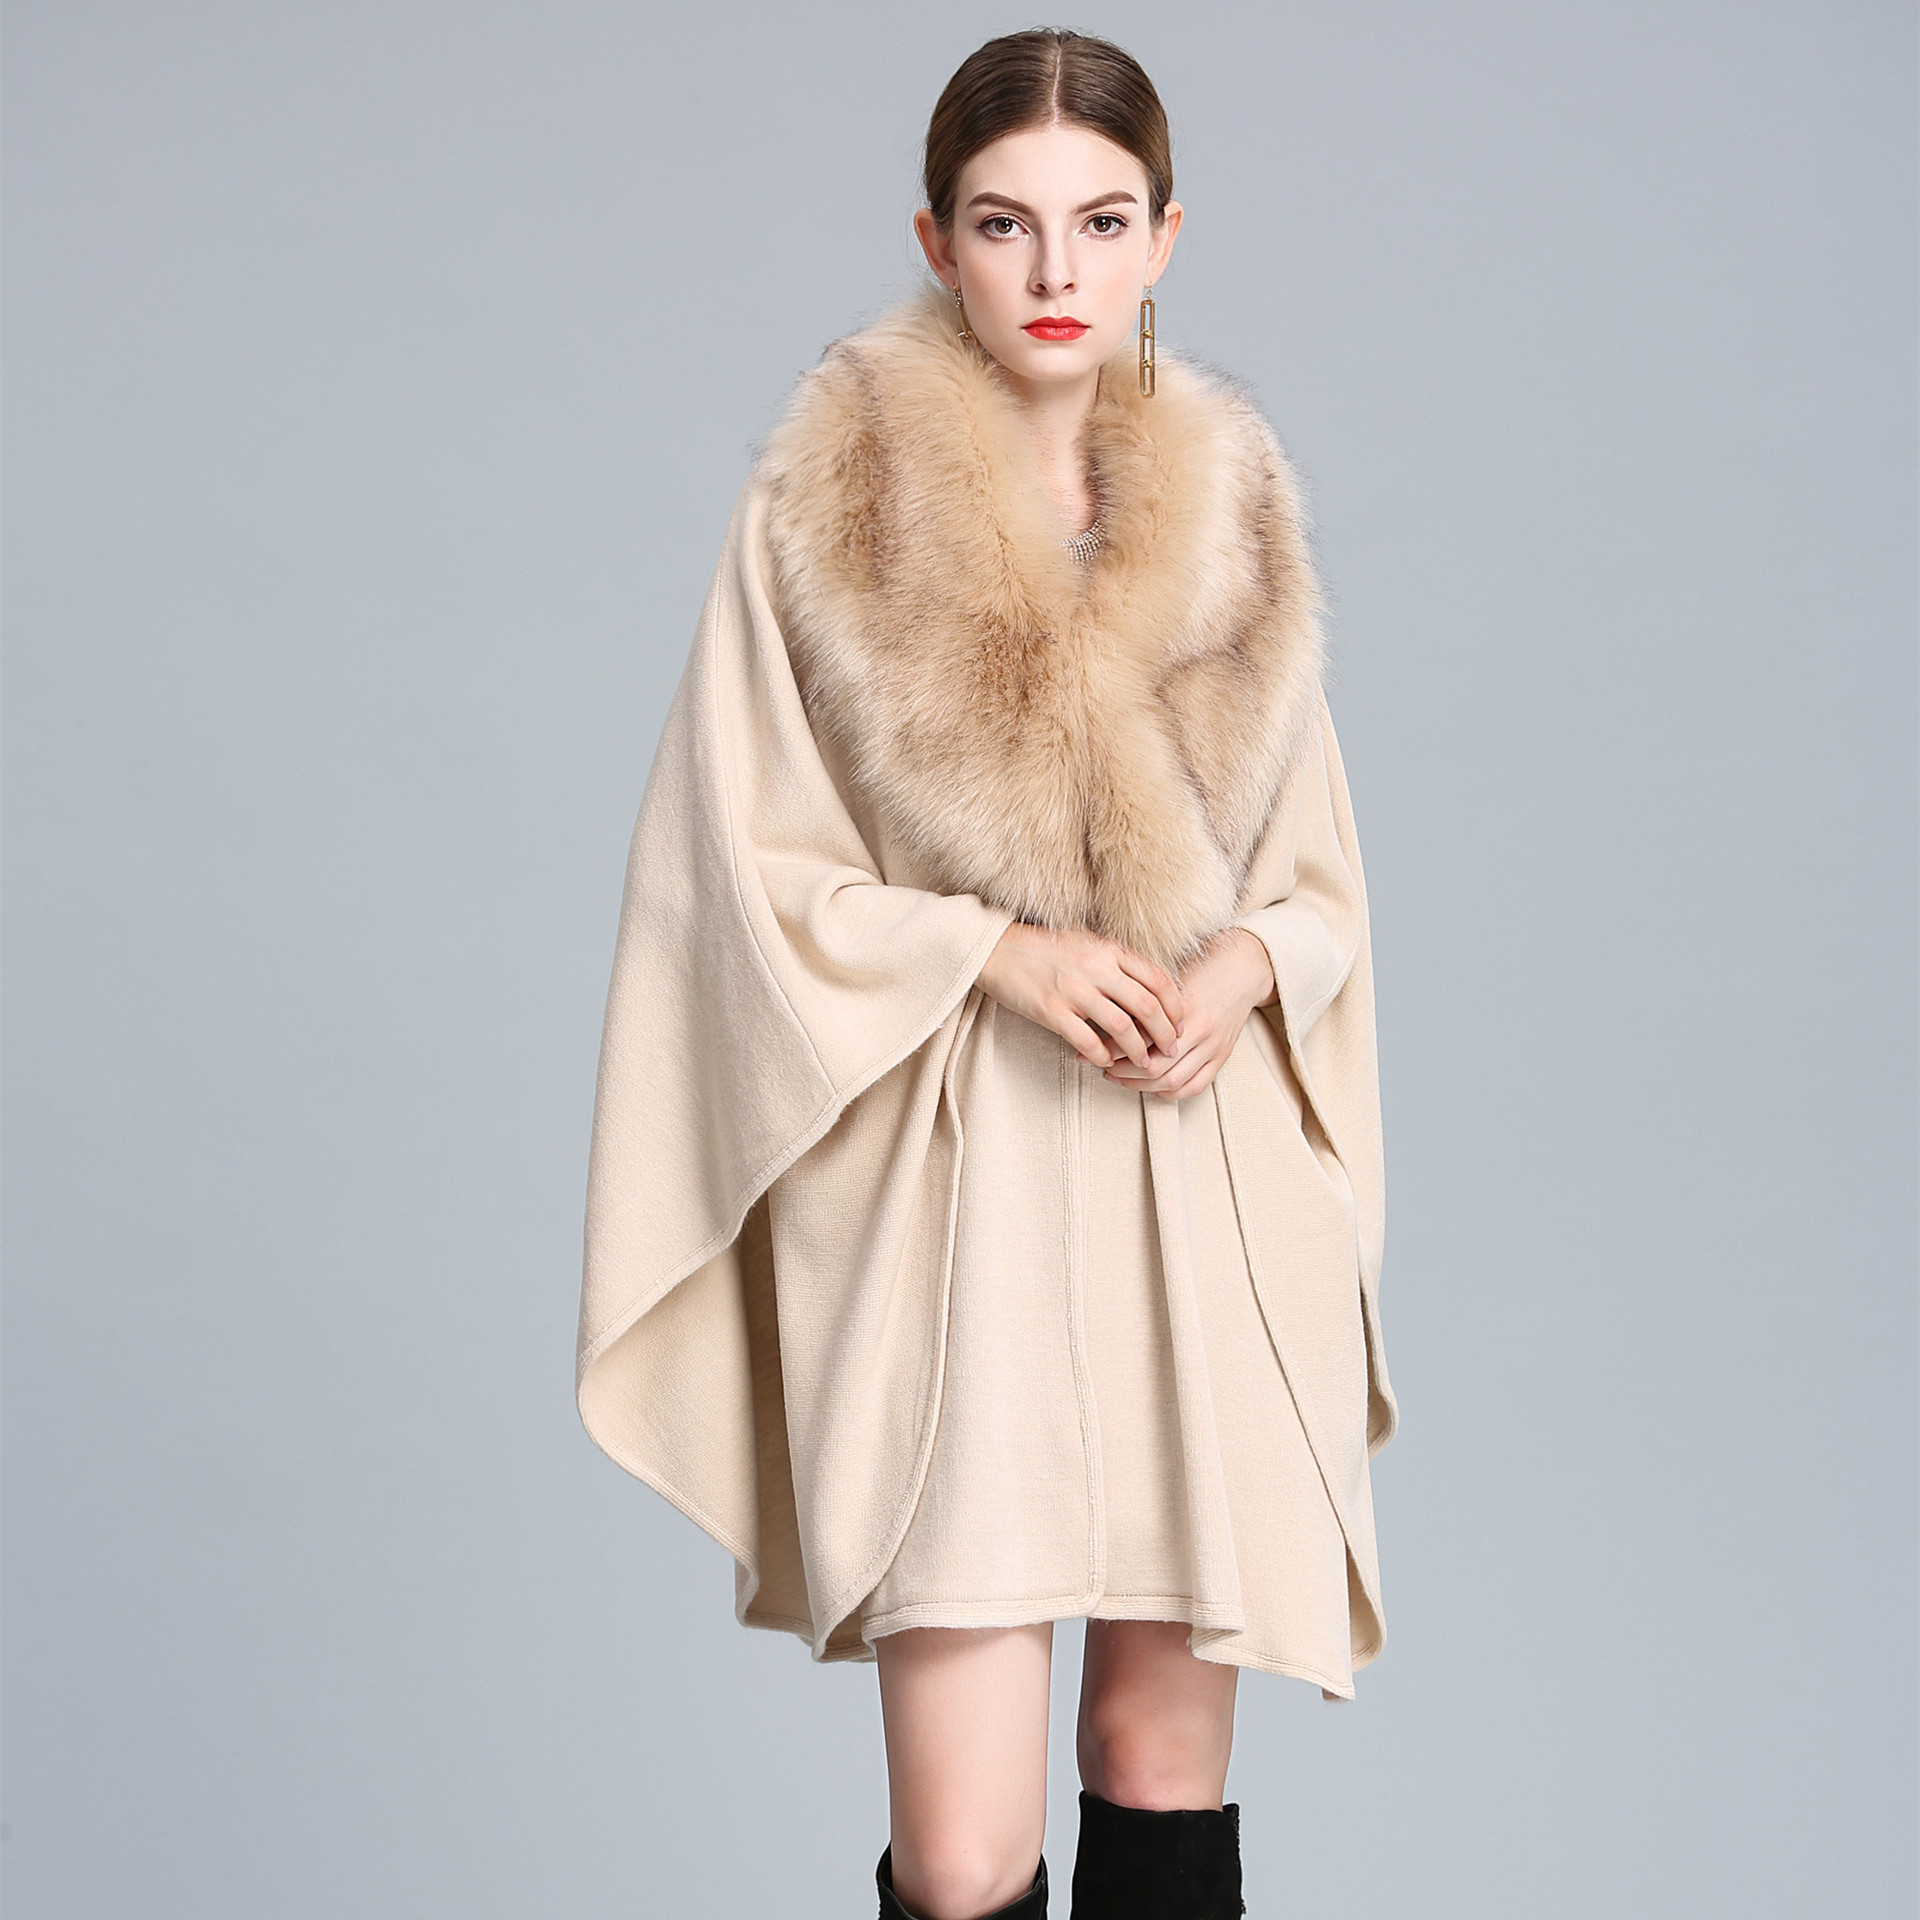 556# Autumn and Winter New Imitation Fox Fur Collar Shawl Cape Mid-Length Big Fur Collar Shawl Oversized Knitted Cardigan